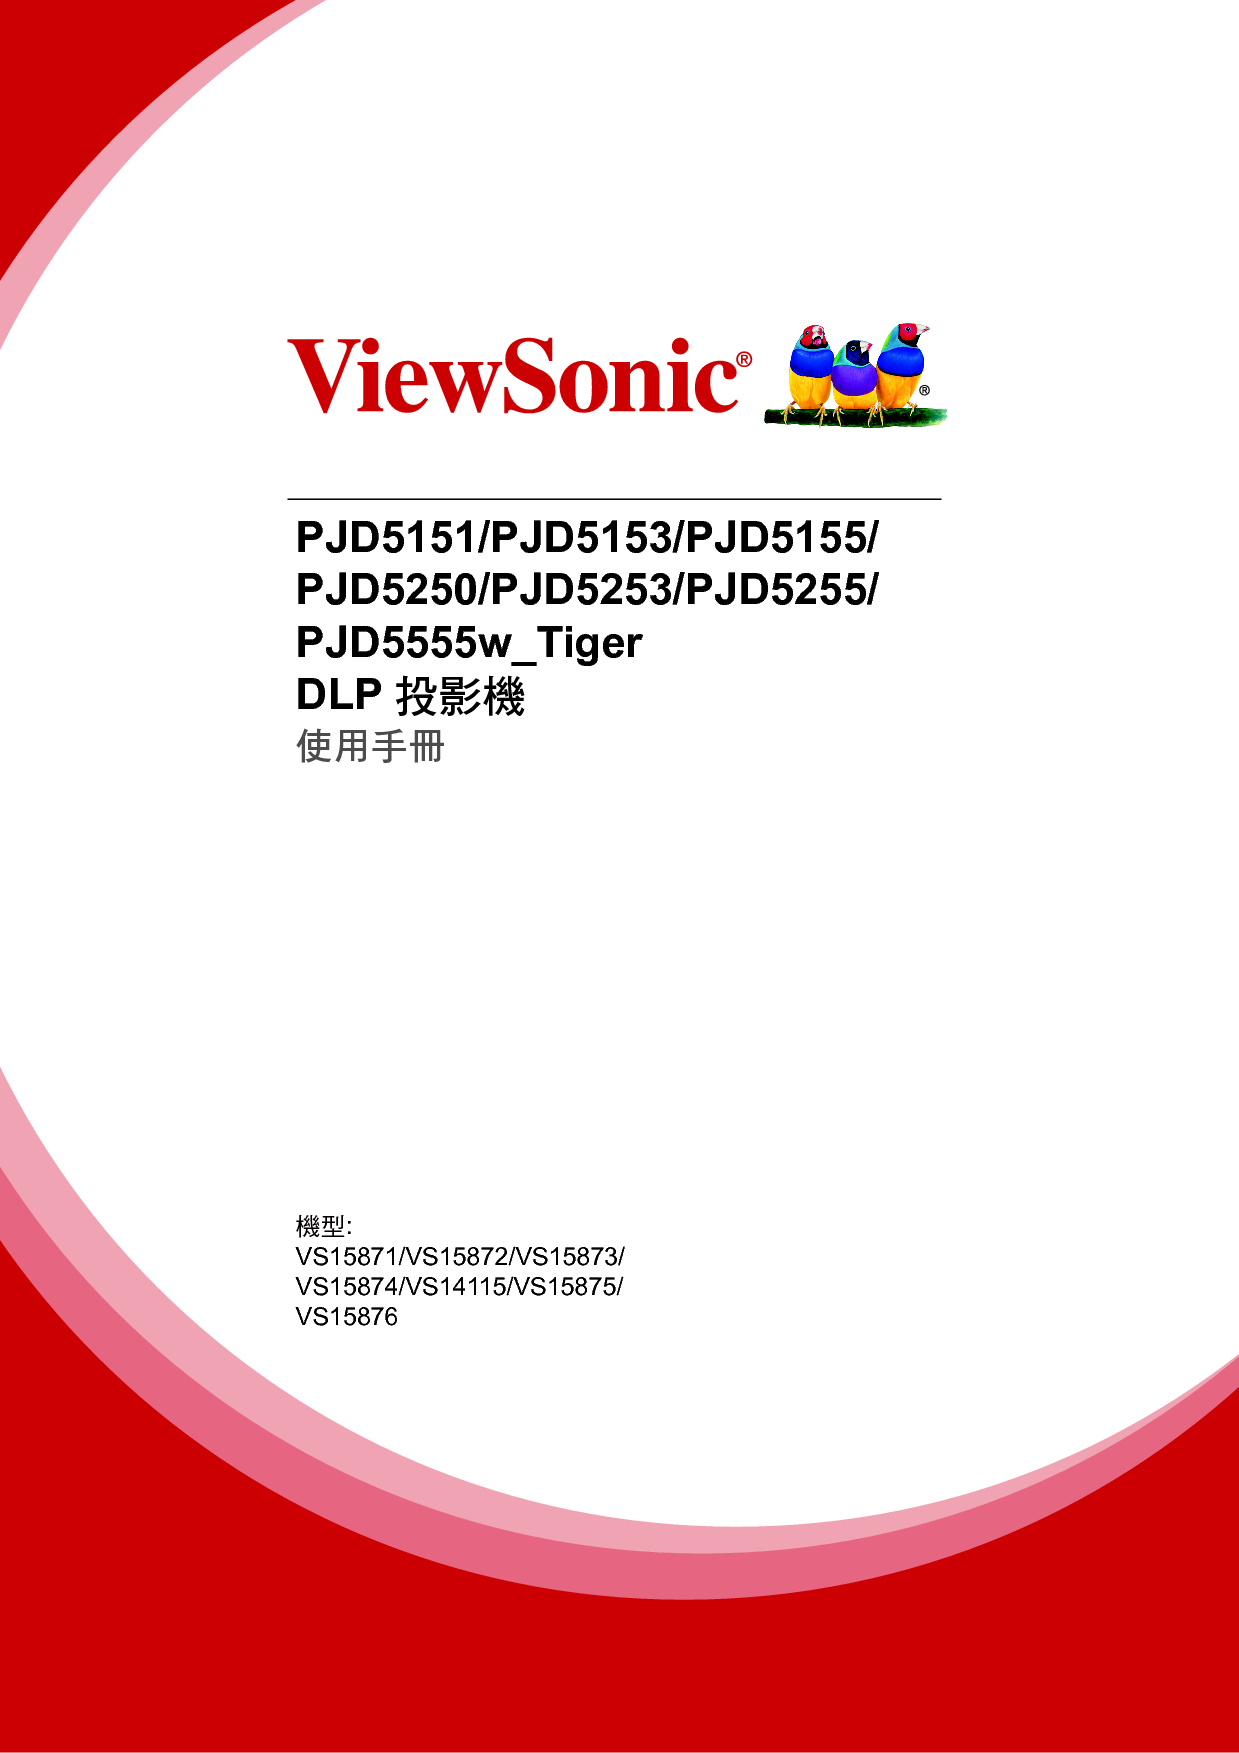 优派 ViewSonic PJD5151, PJD5555w_Tiger 繁体使用说明书 封面